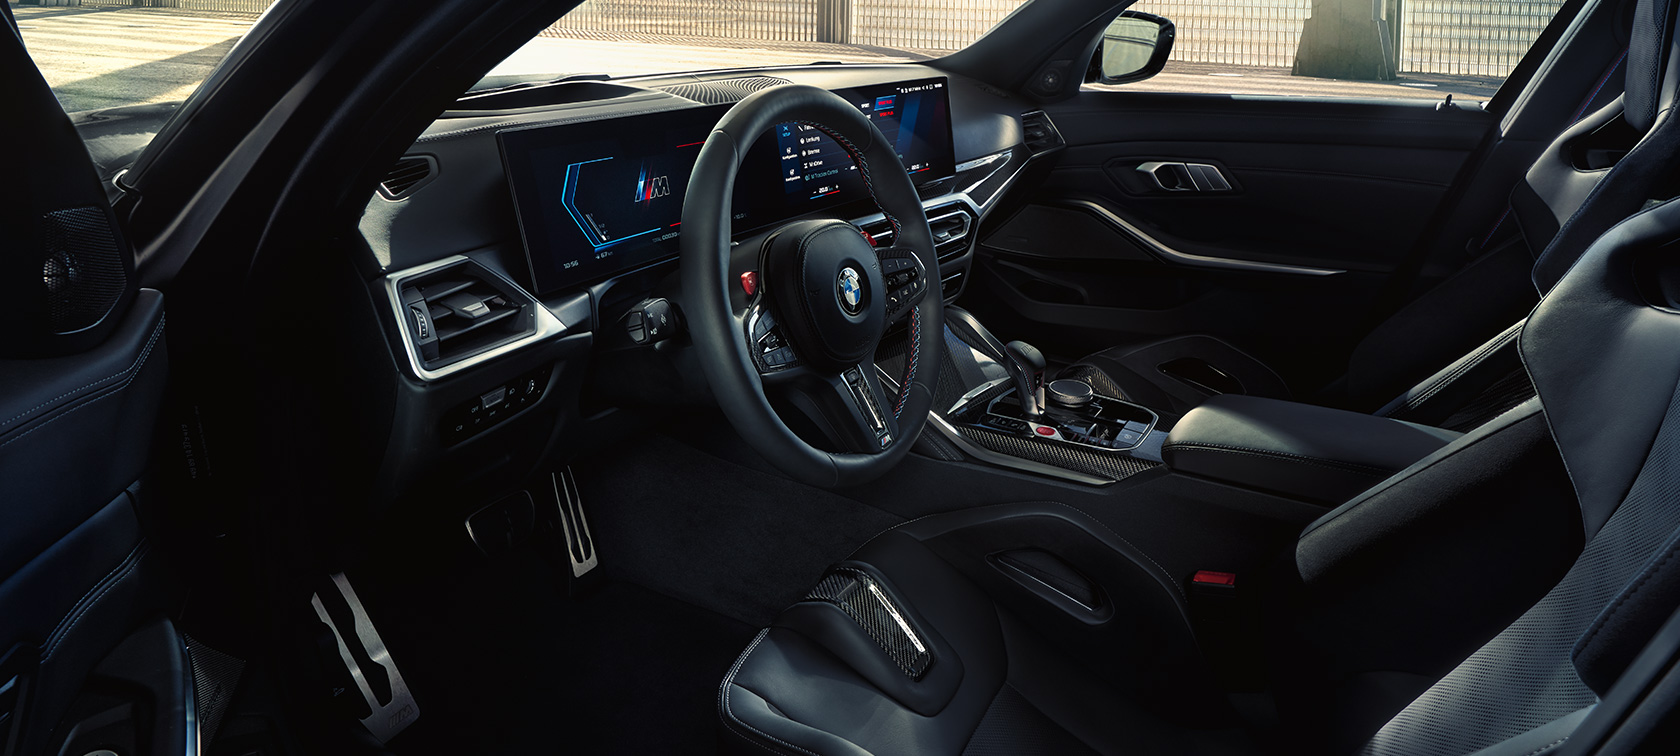 BMW 3 Series Touring M Automobiles Cockpit Interior